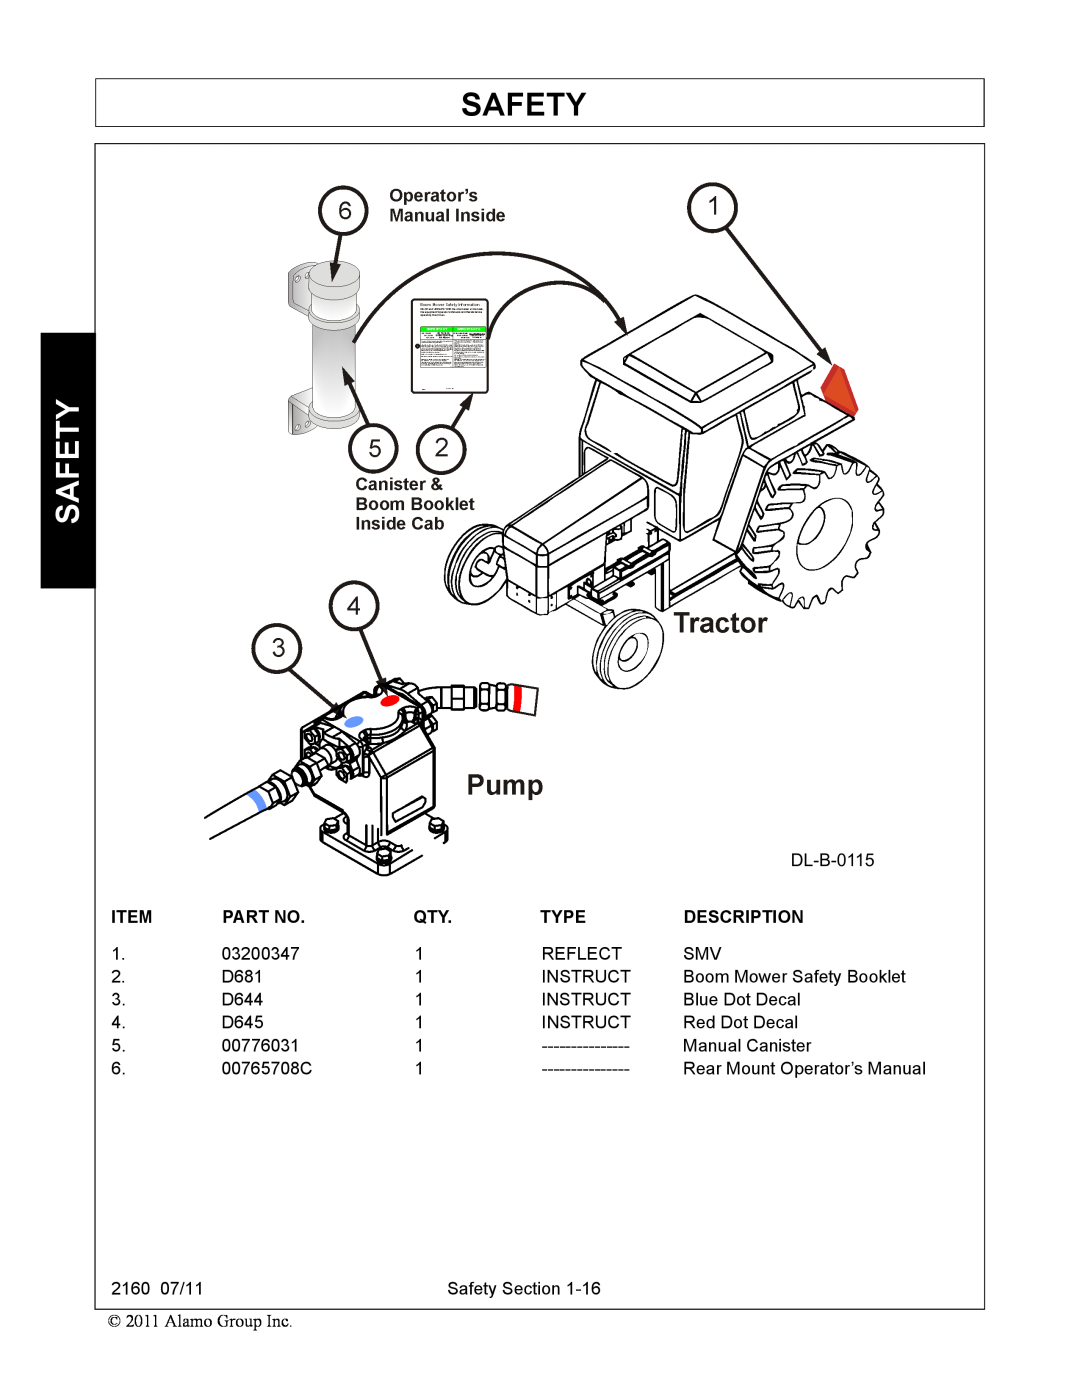 Servis-Rhino 2160 manual Safety, Type, Description 